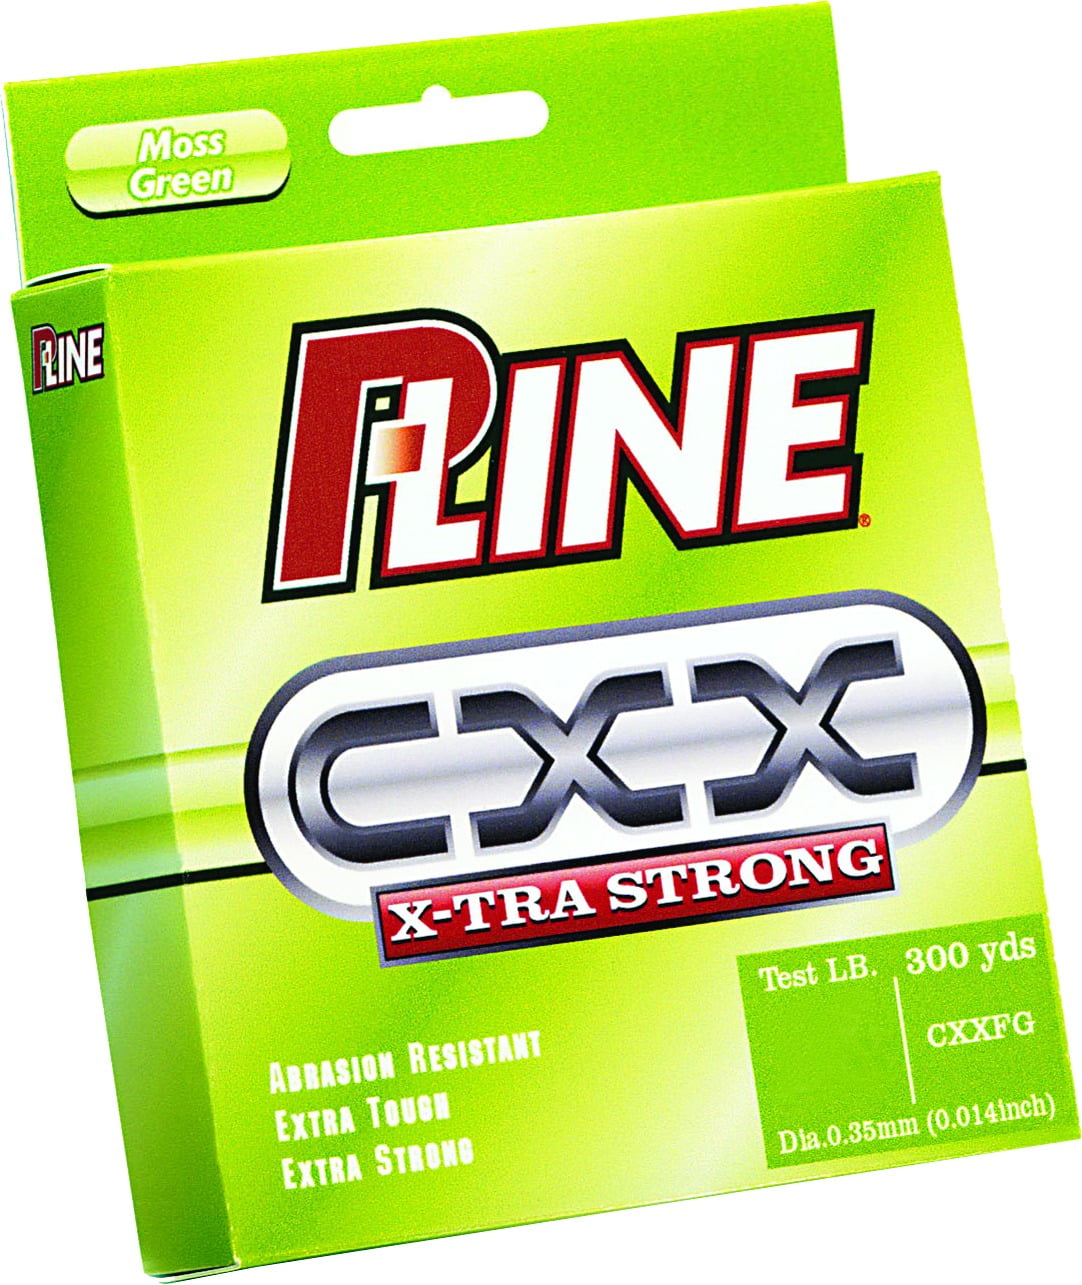 P LINE MOSS GREEN CXX EXTRA STRONG CXXFG 260/300YDS VARIOUS TEST WEIGHTS 